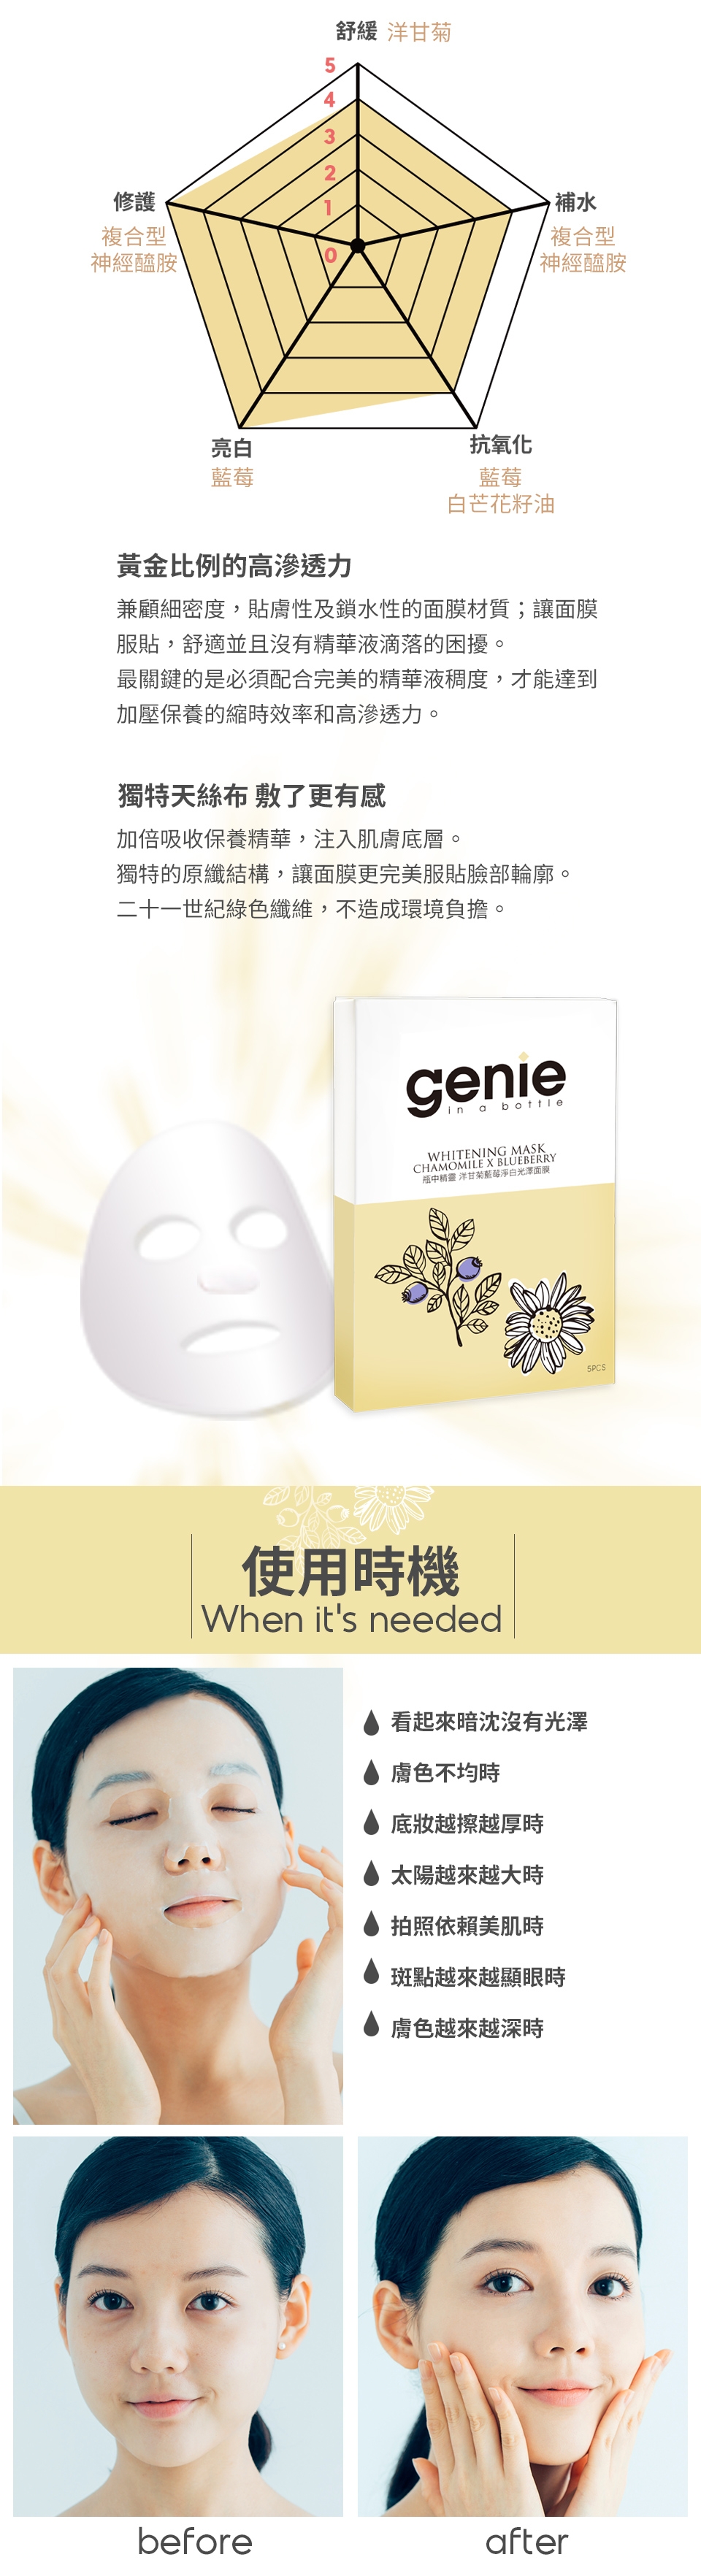 Genie瓶中精靈 雙11 洋甘菊淨白面膜/膠原蘭花面膜(60片)